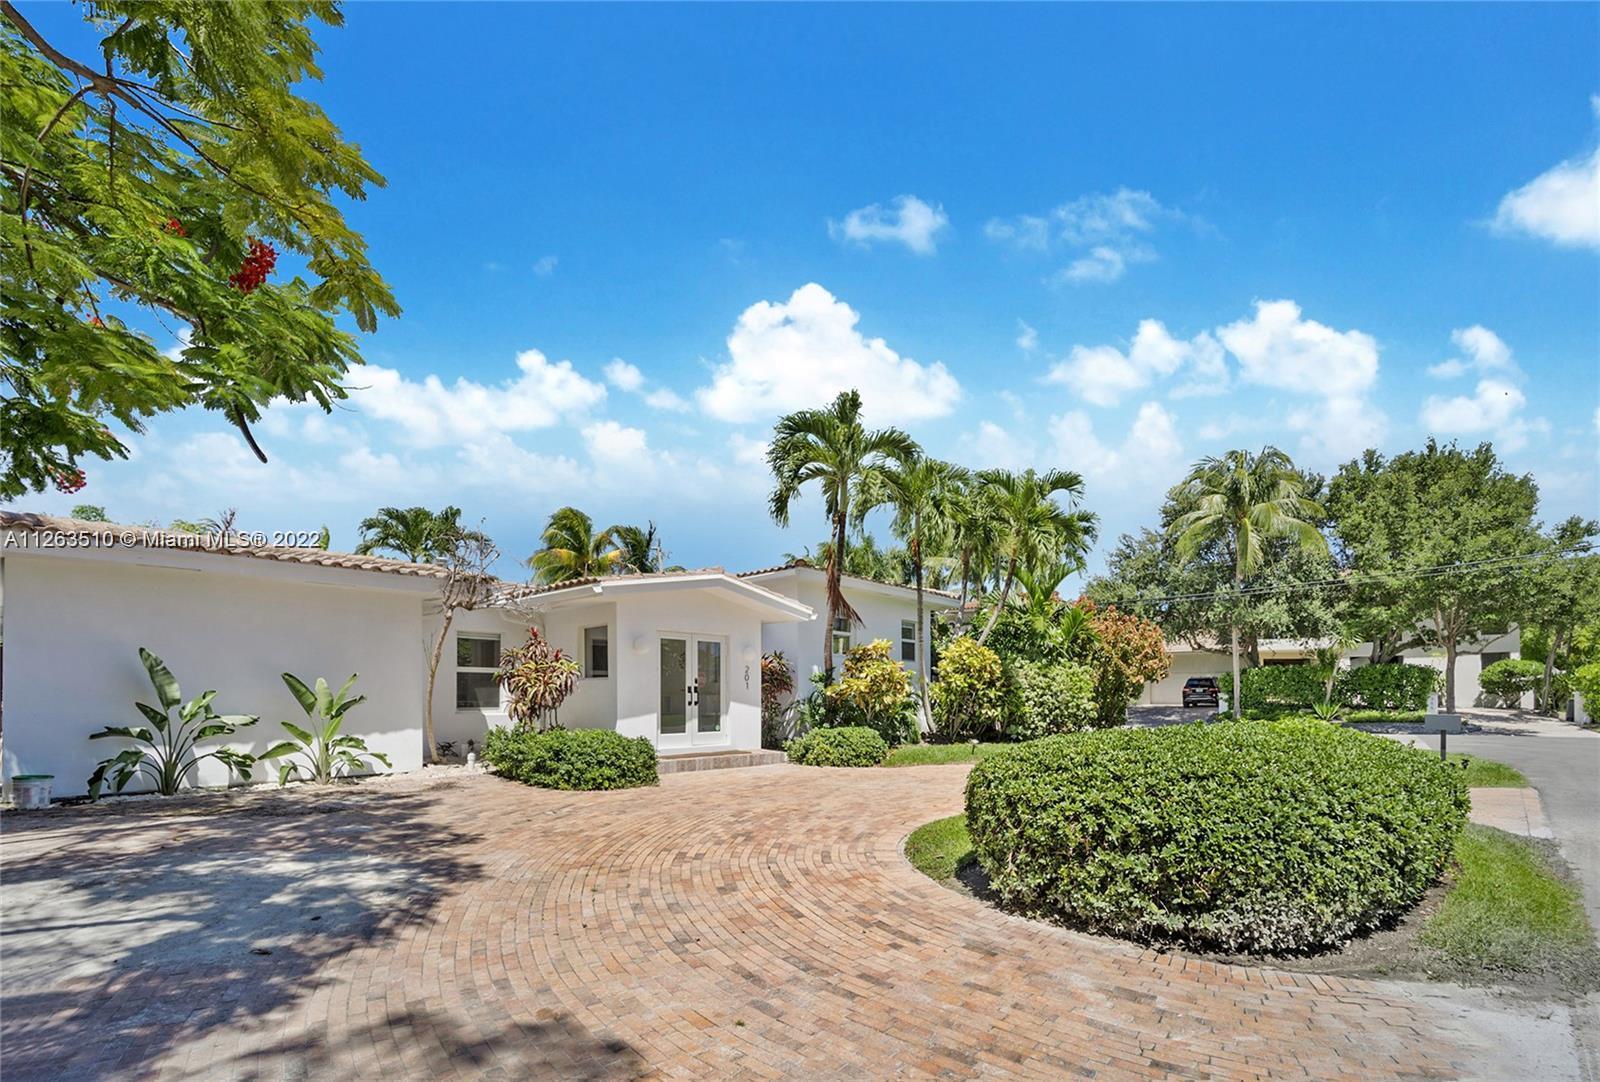 Rental Property at 201 Greenwood Dr, Key Biscayne, Miami-Dade County, Florida - Bedrooms: 4 
Bathrooms: 4  - $19,900 MO.